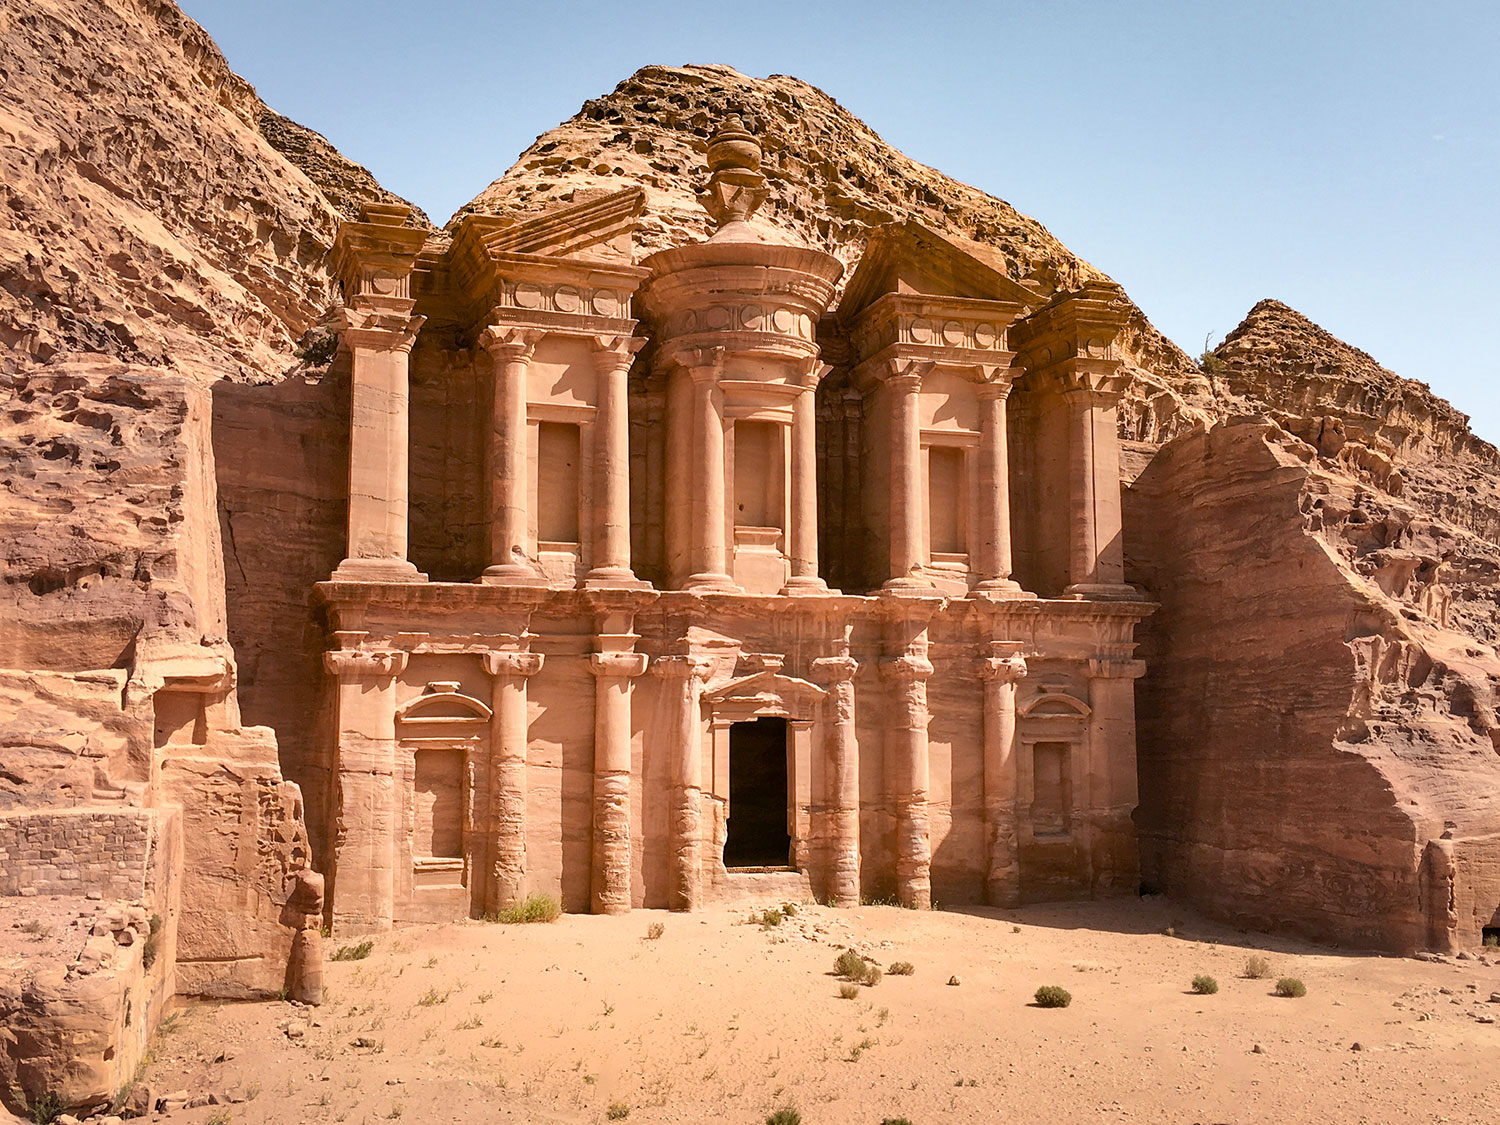 Monastère, Petra, Jordanie / Monastery, Petra, Jordan